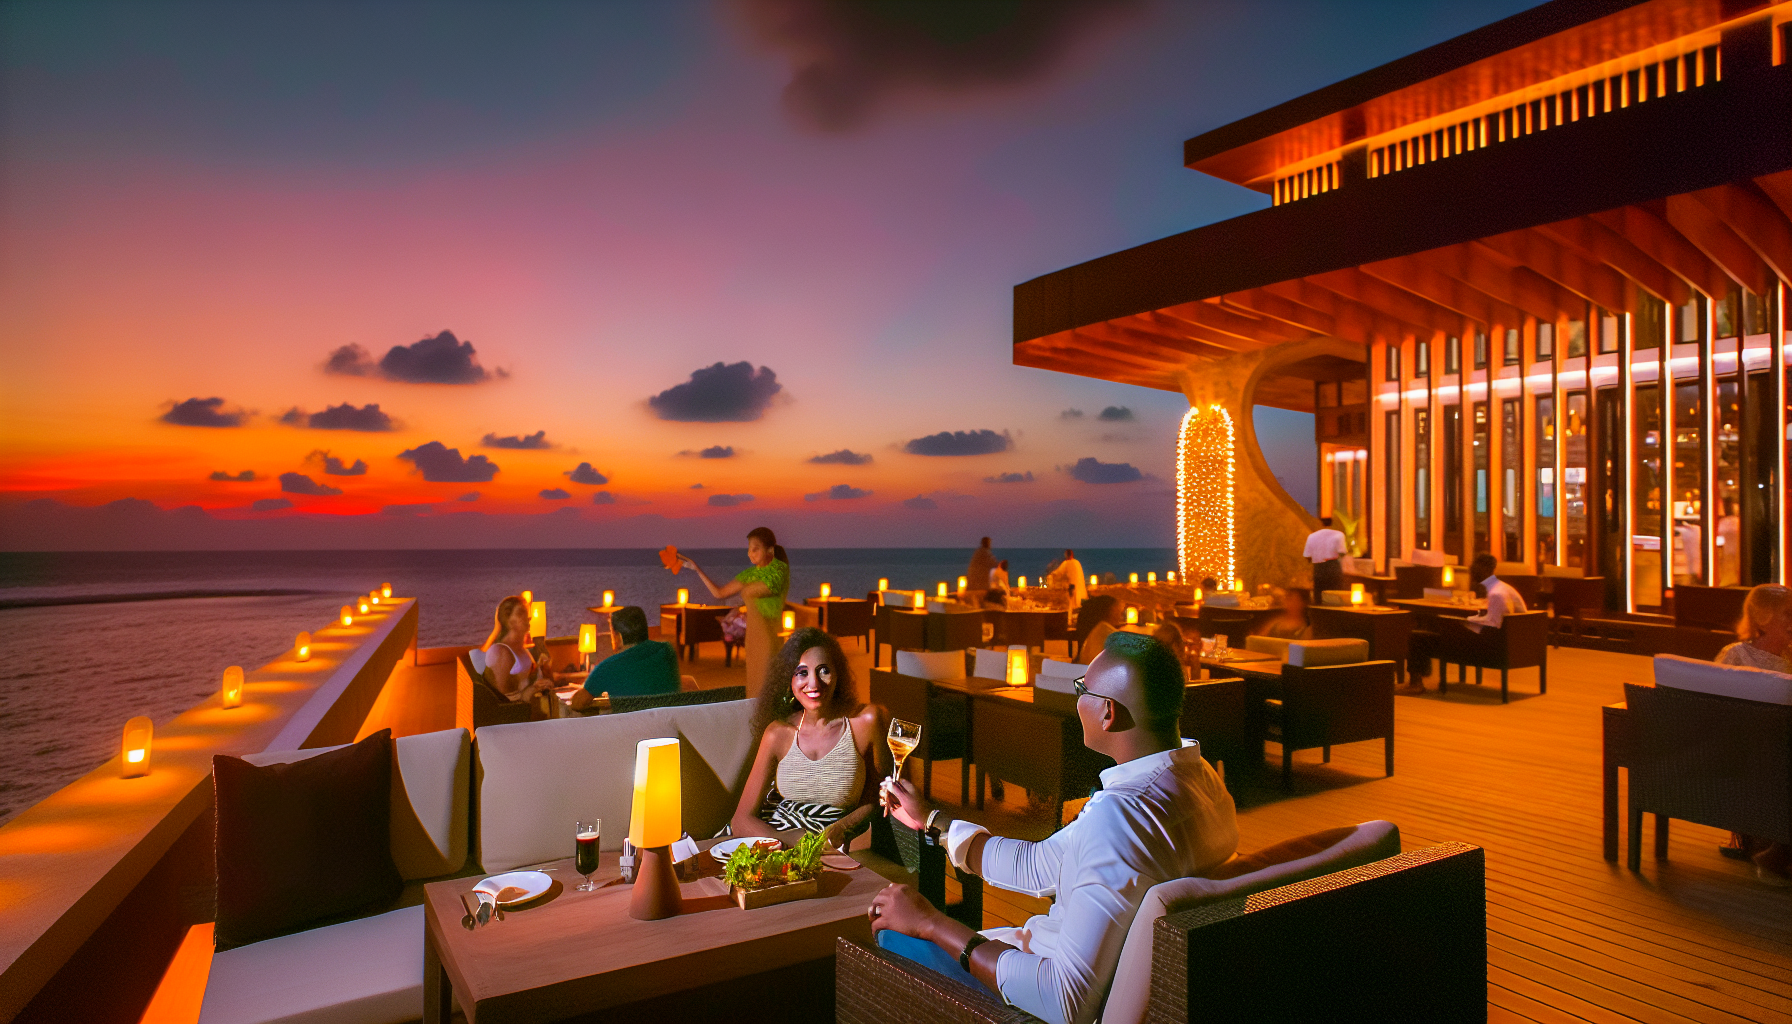 Delight in oceanfront dining at Sea Level Restaurant and Ocean Bar at Marriott Fort Lauderdale Harbor Beach Resort & Spa